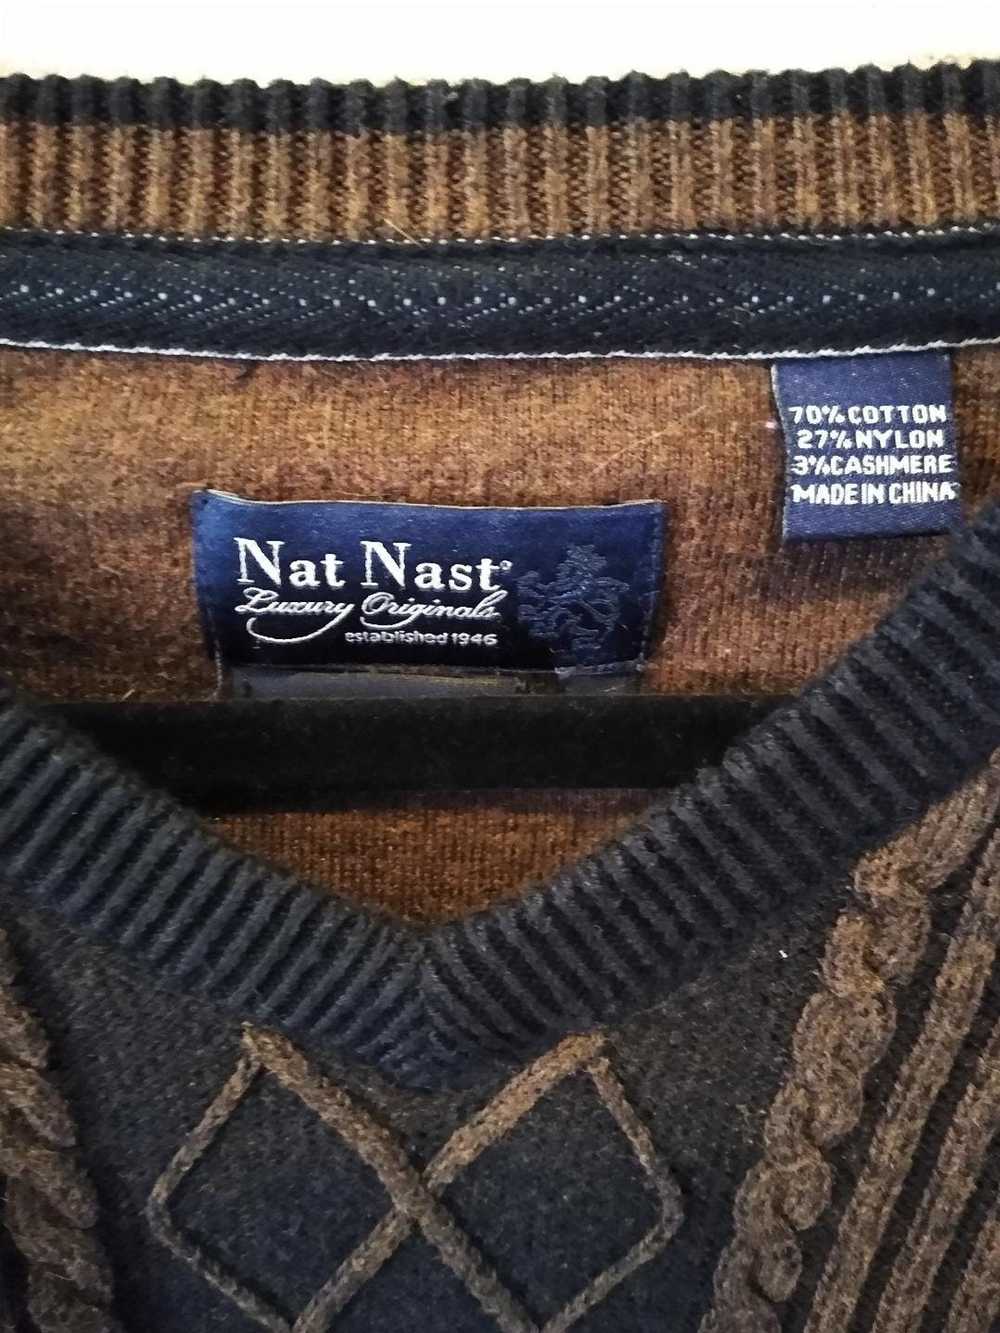 Nat Nast Luxury Original V-Neck Cable Knit Sweater - image 3